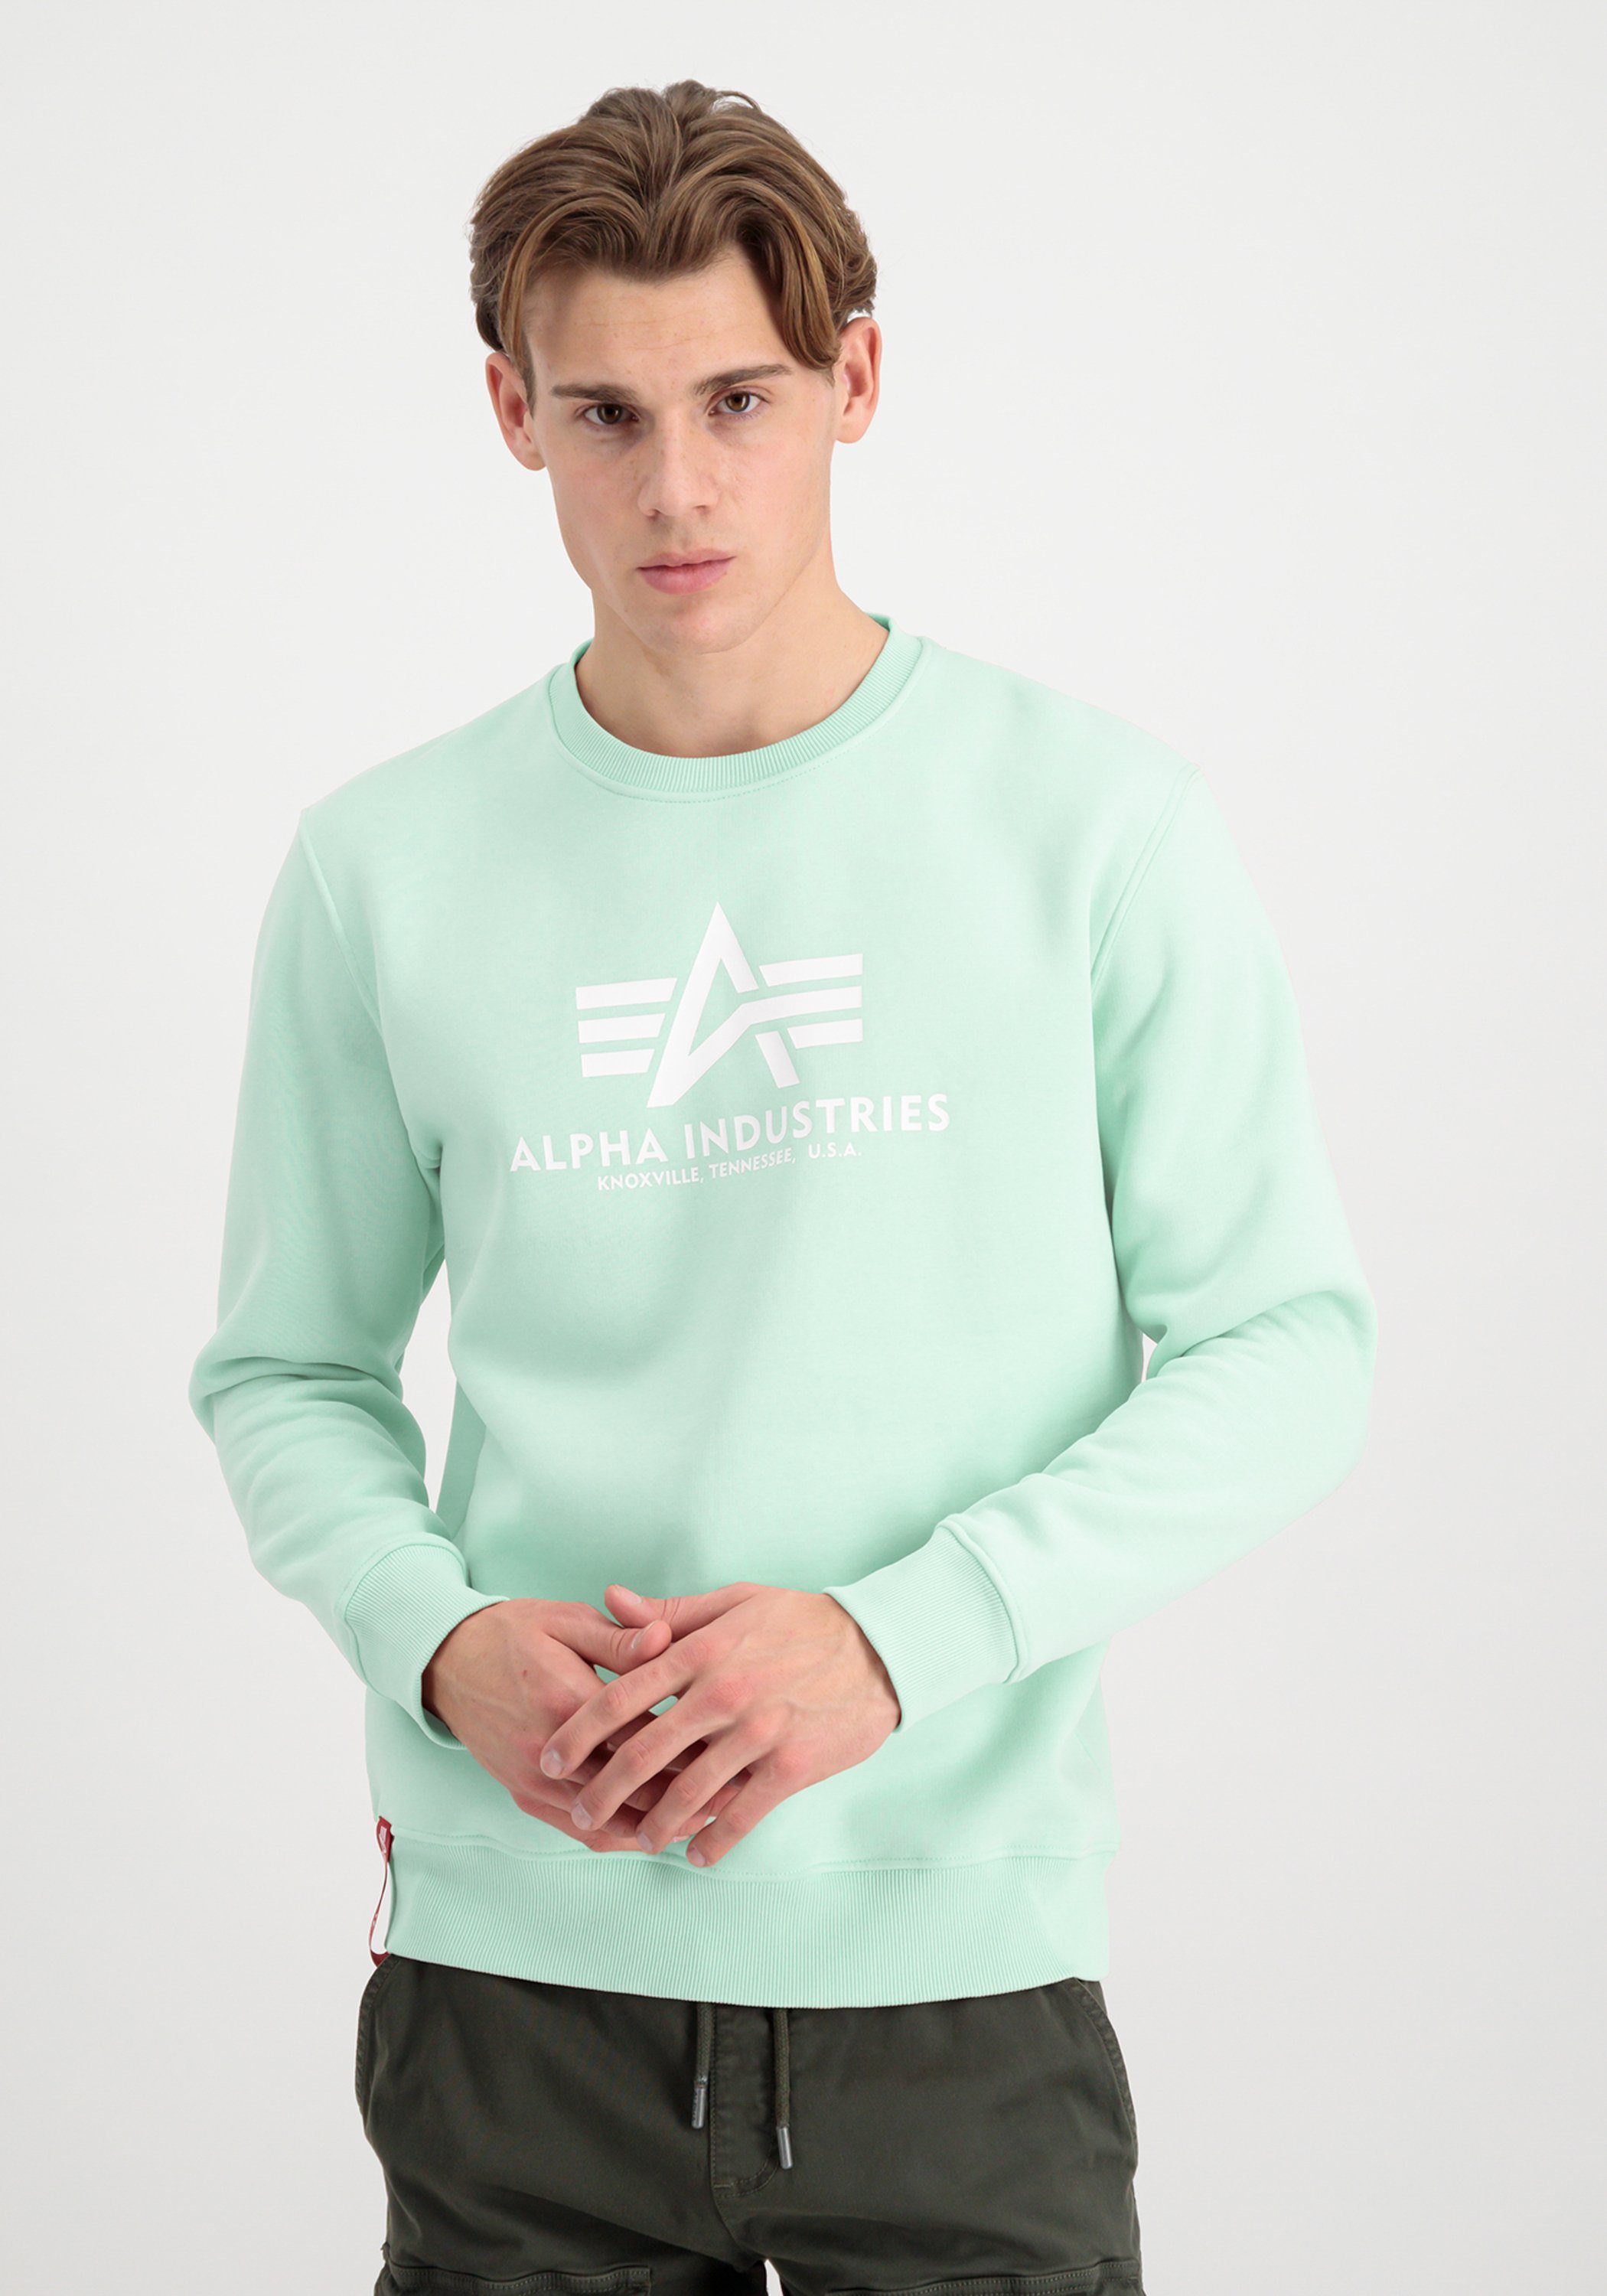 Alpha Men Sweatshirts Basic mint - Industries Sweater Alpha Sweater Industries